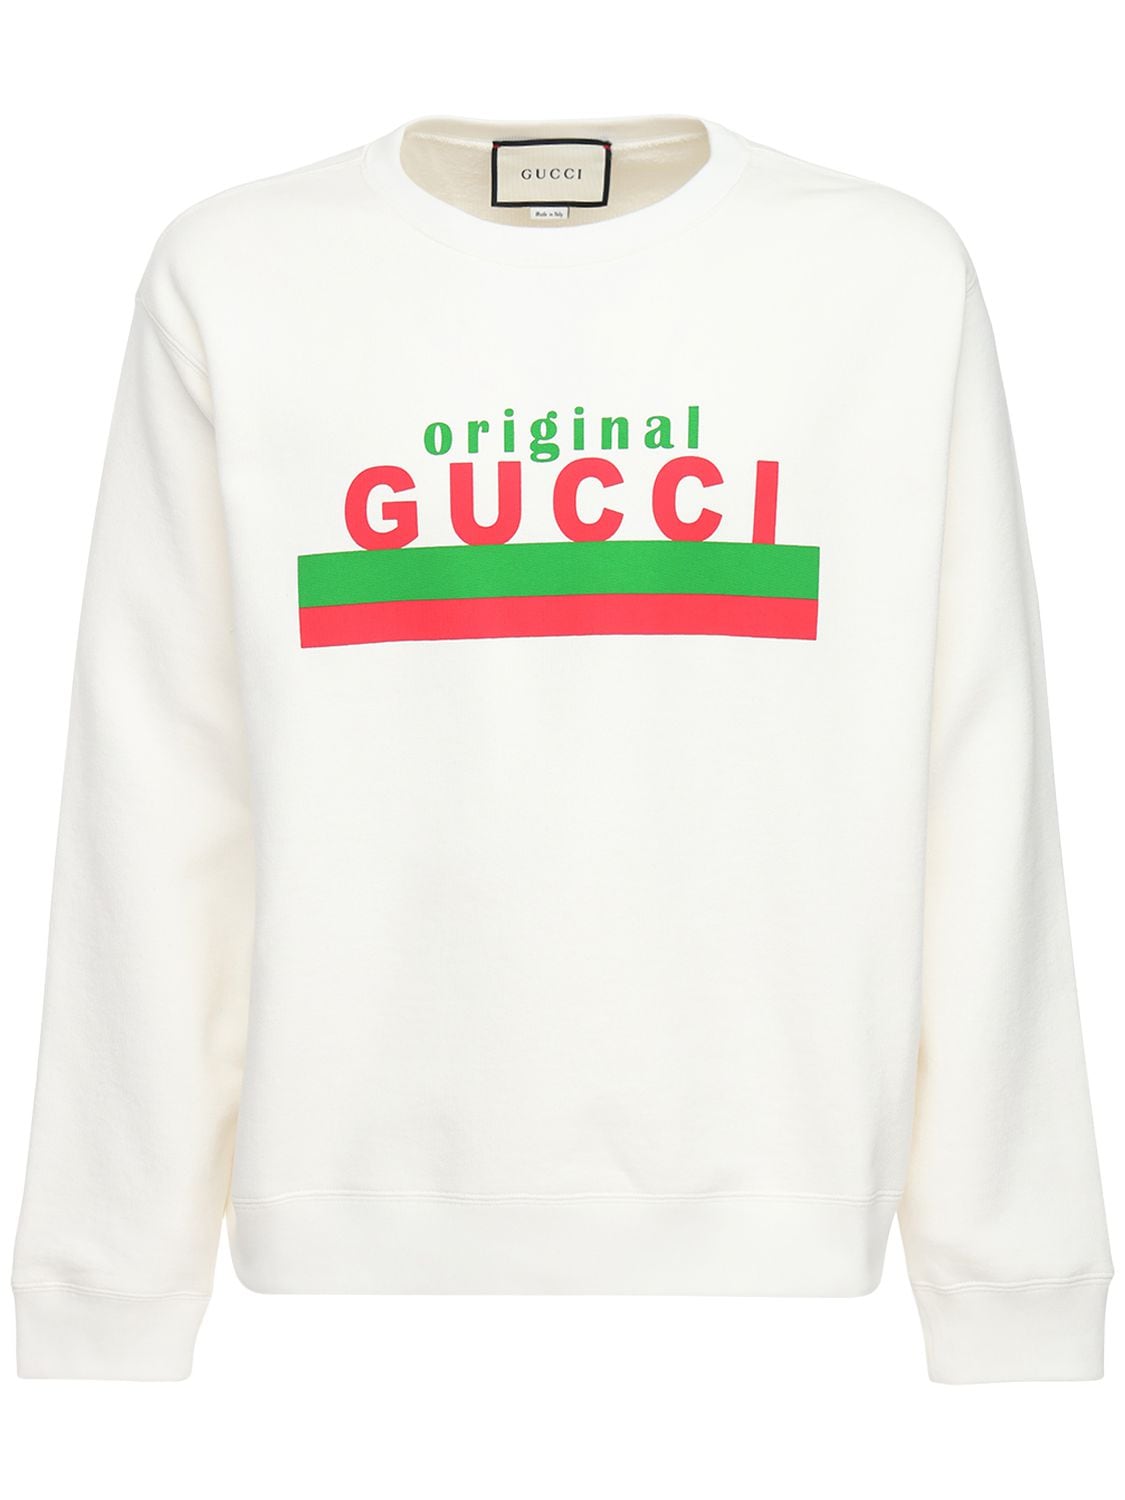 Image of Gucci Original Print Cotton Sweatshirt